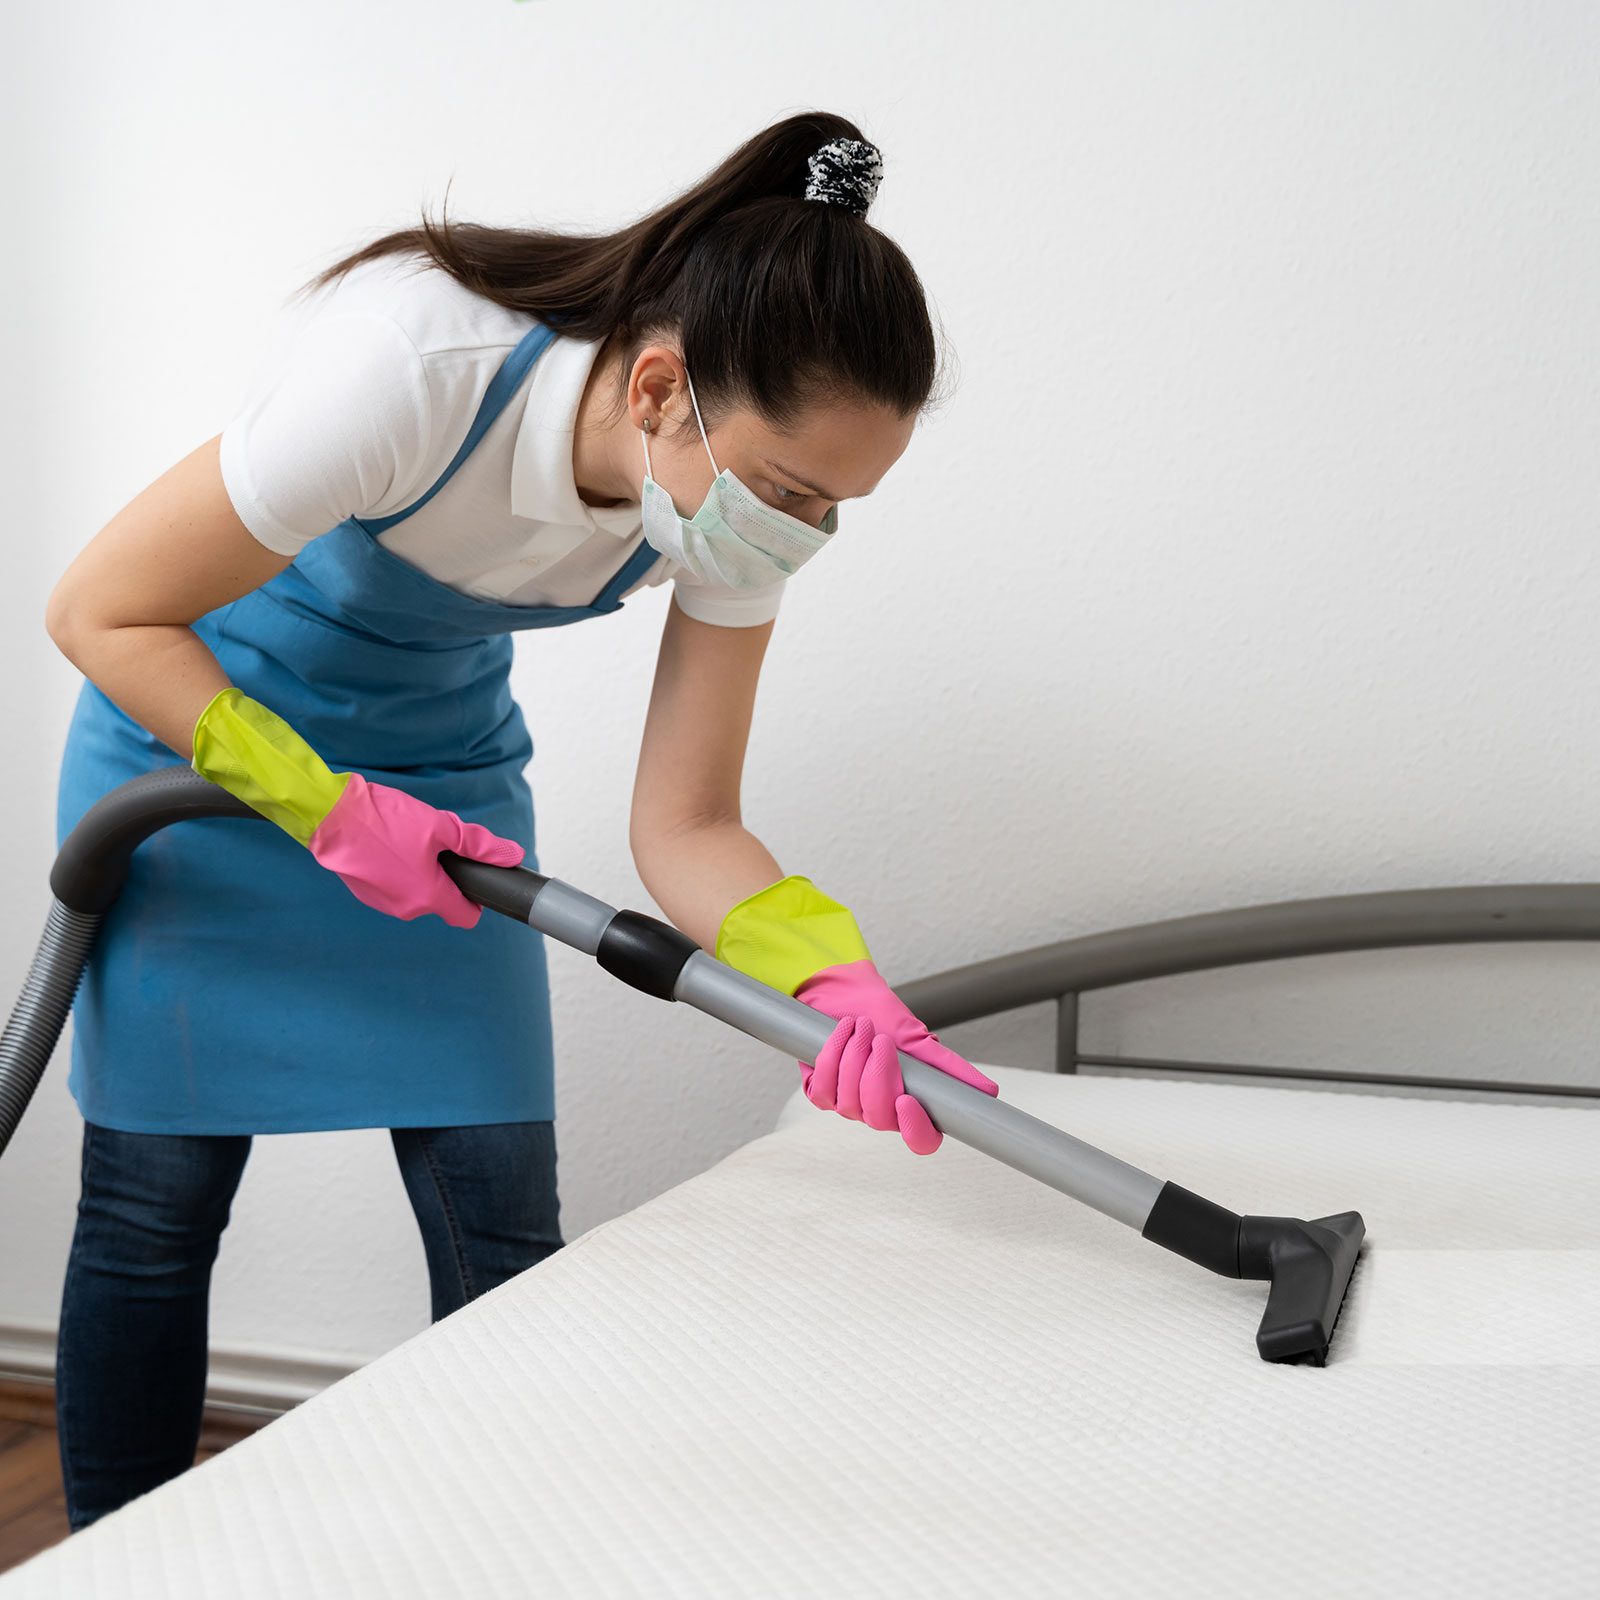 Mattress Cleaning Professional vacuums dirty mattress